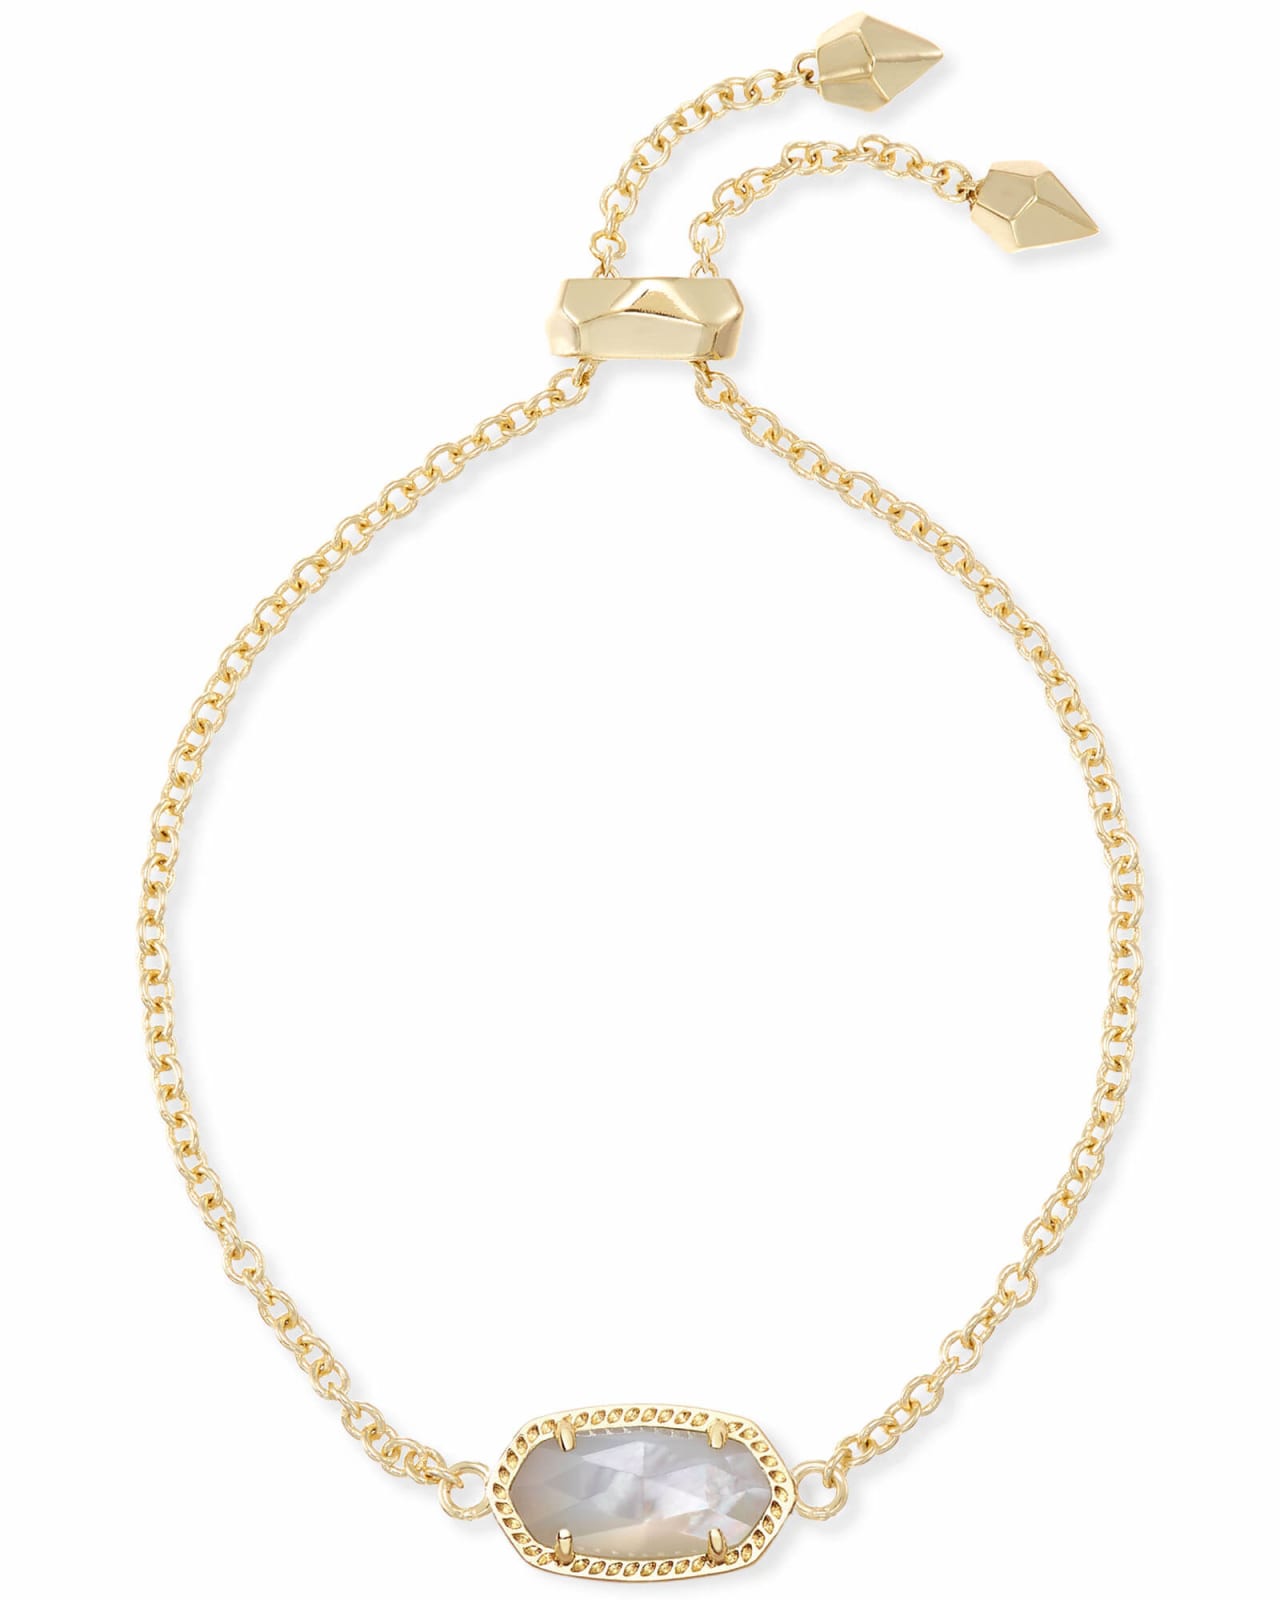 Elaina Gold Adjustable Chain Bracelet in Azalea Illusion | Kendra Scott | Kendra Scott